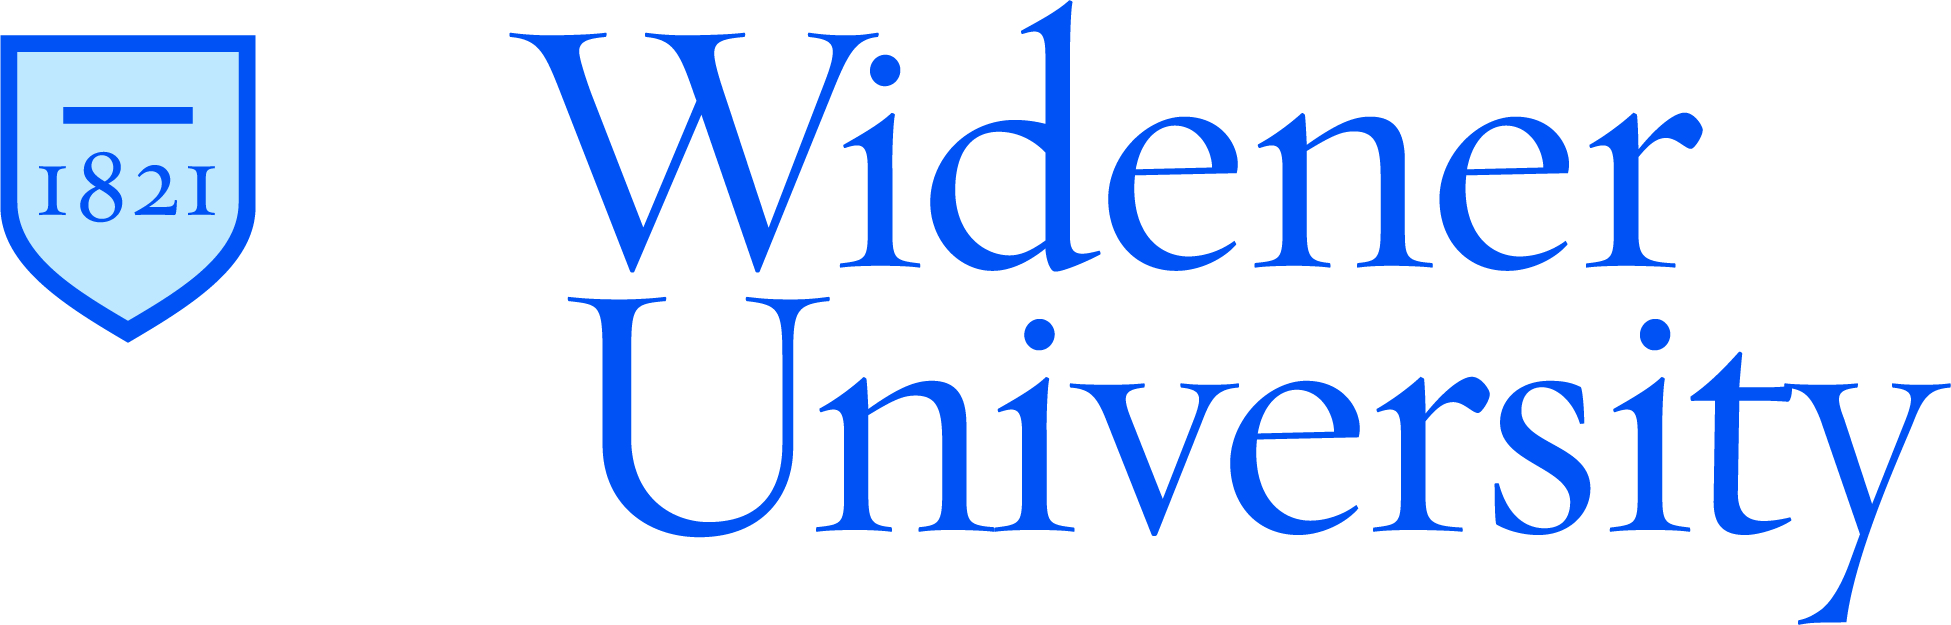 widener university logo